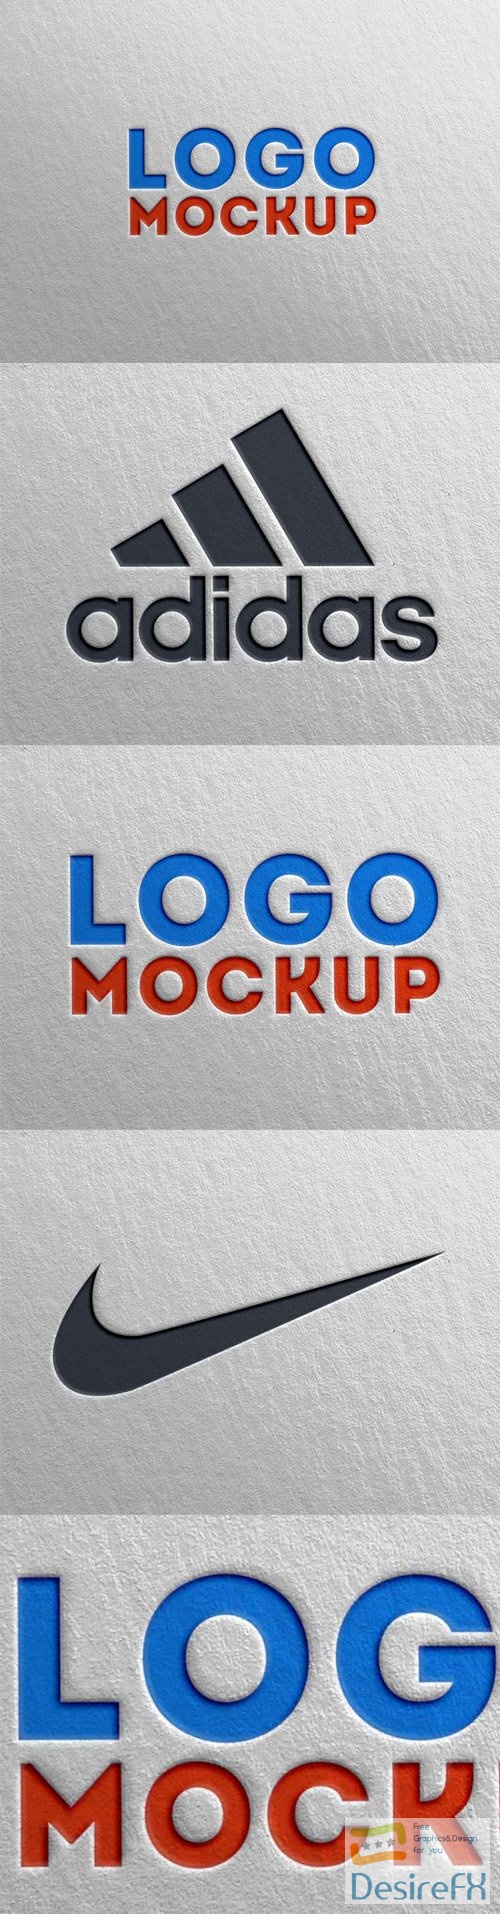 Realistic Letterpress Logo Style PSD Mockup Template